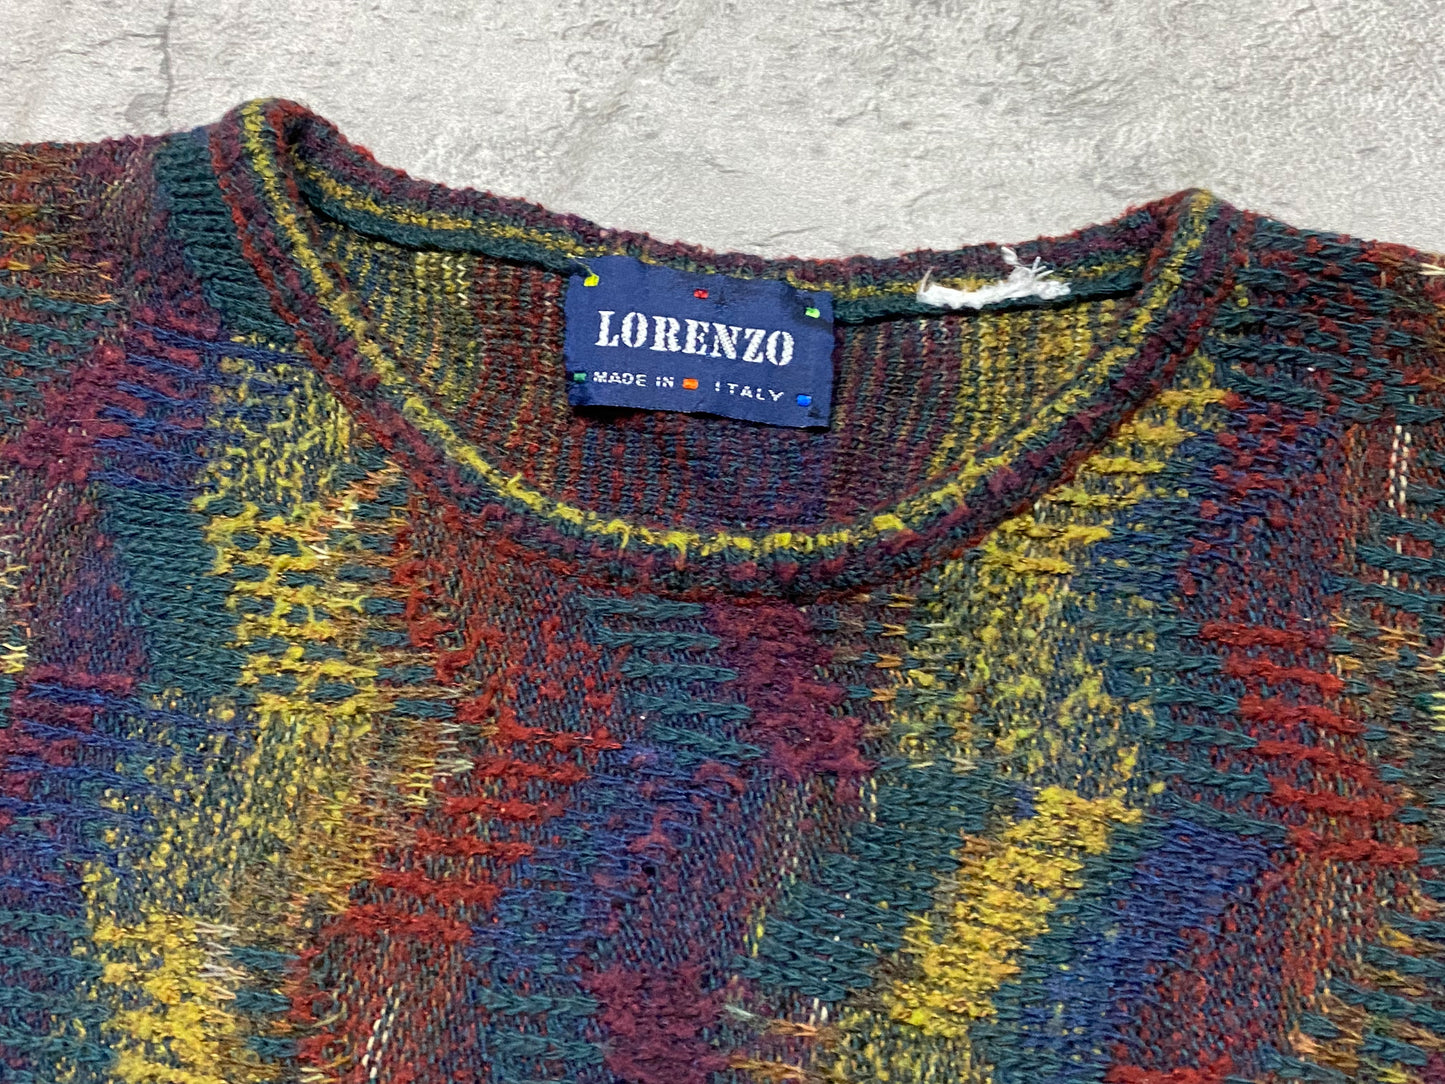 EURO Italy Design Knit vintage 80s